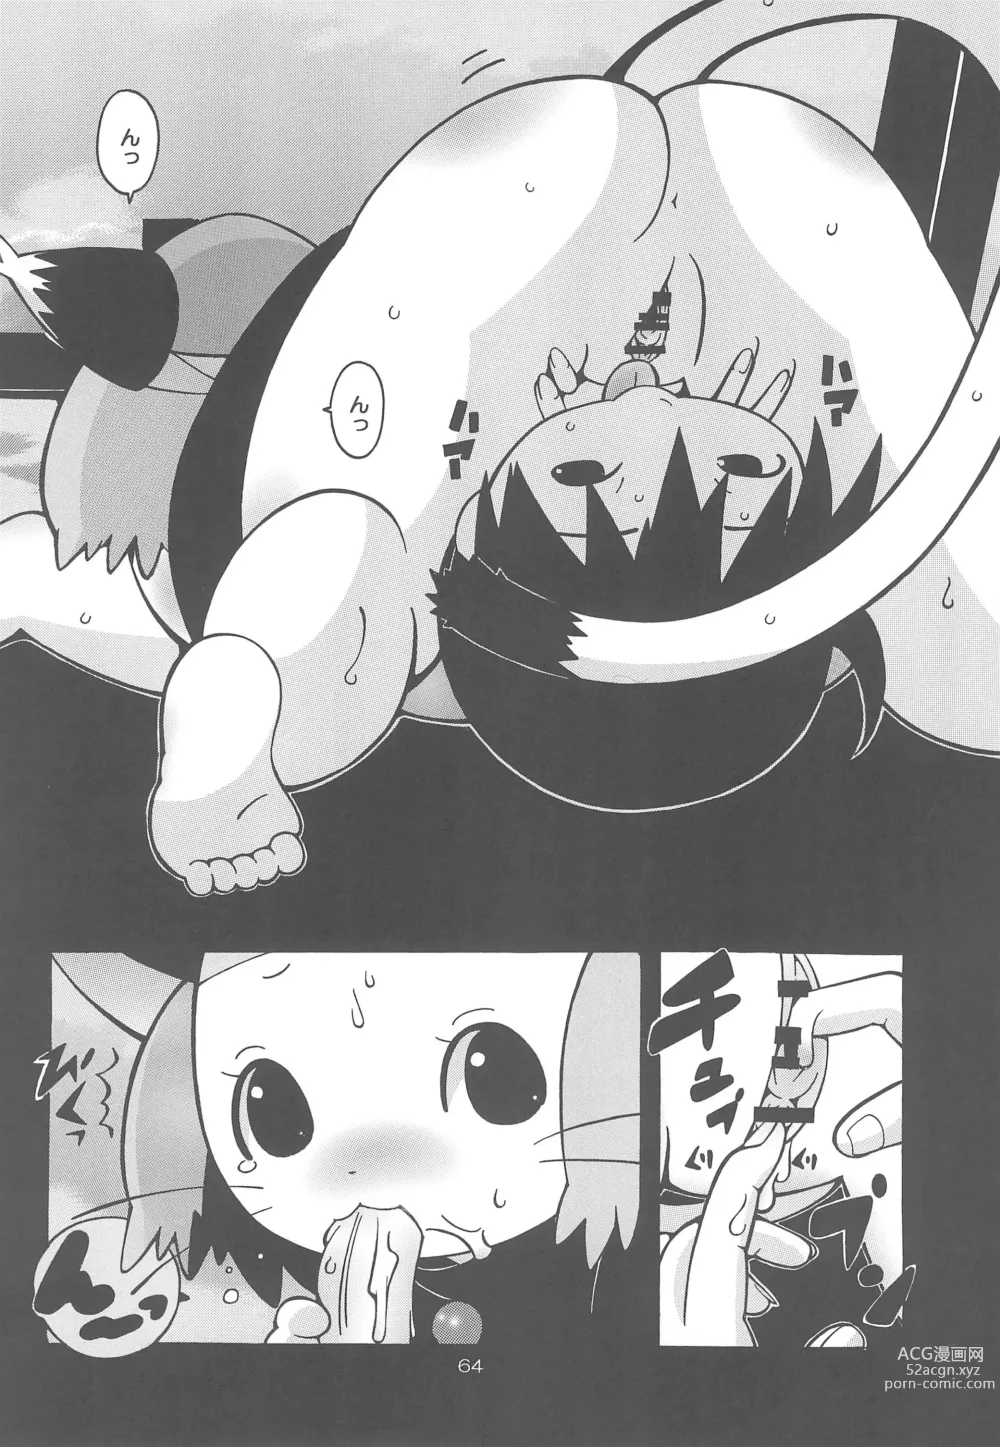 Page 64 of doujinshi Watamii!